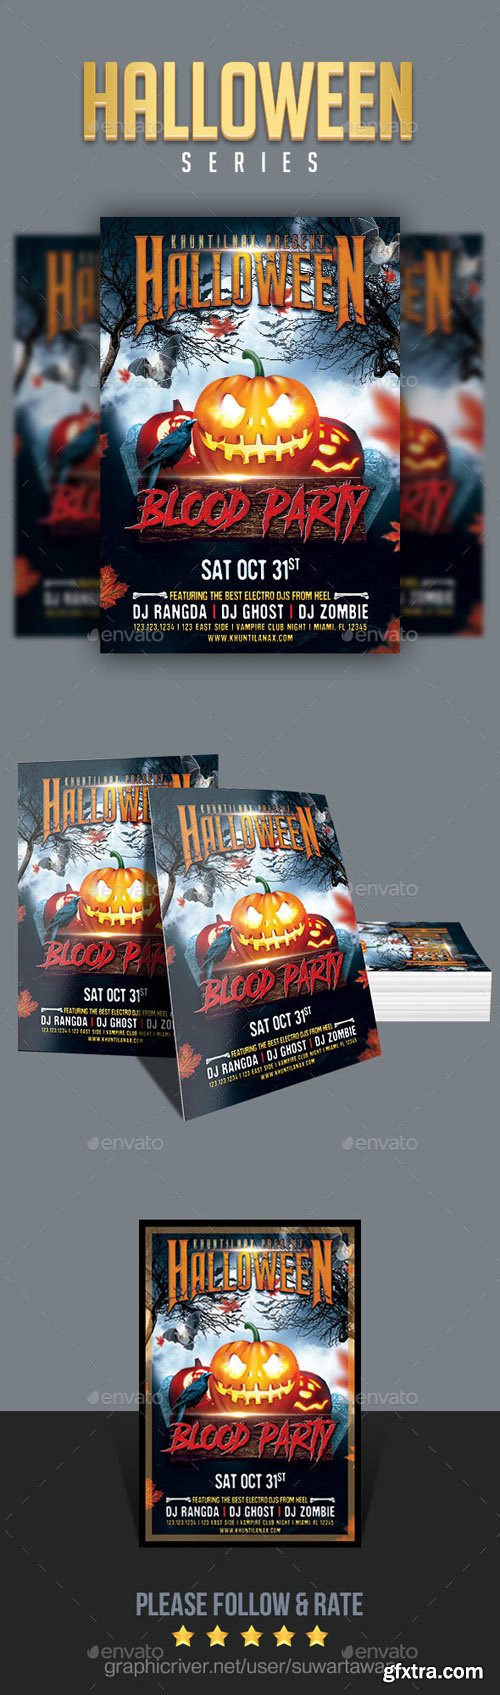 GR - Halloween Blood Party Flyer 20693638